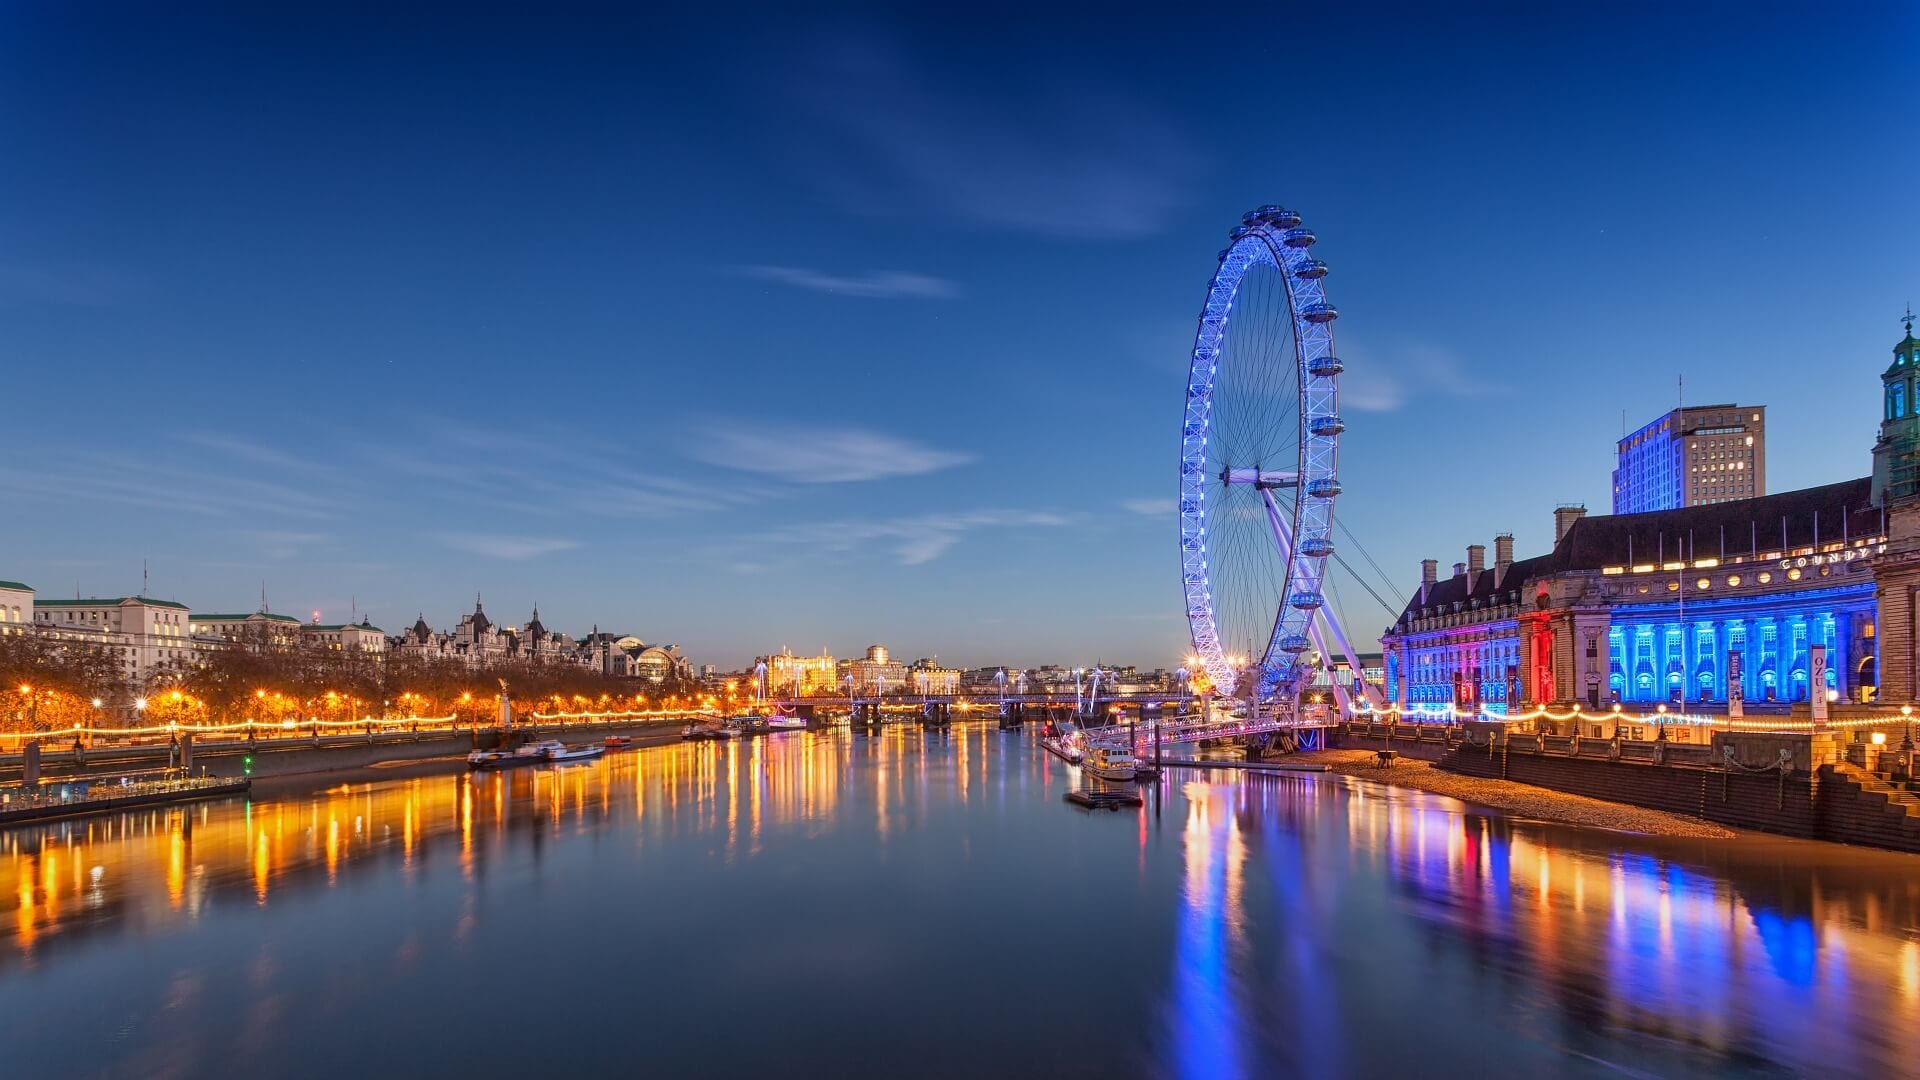 London Eye and river evening skyline